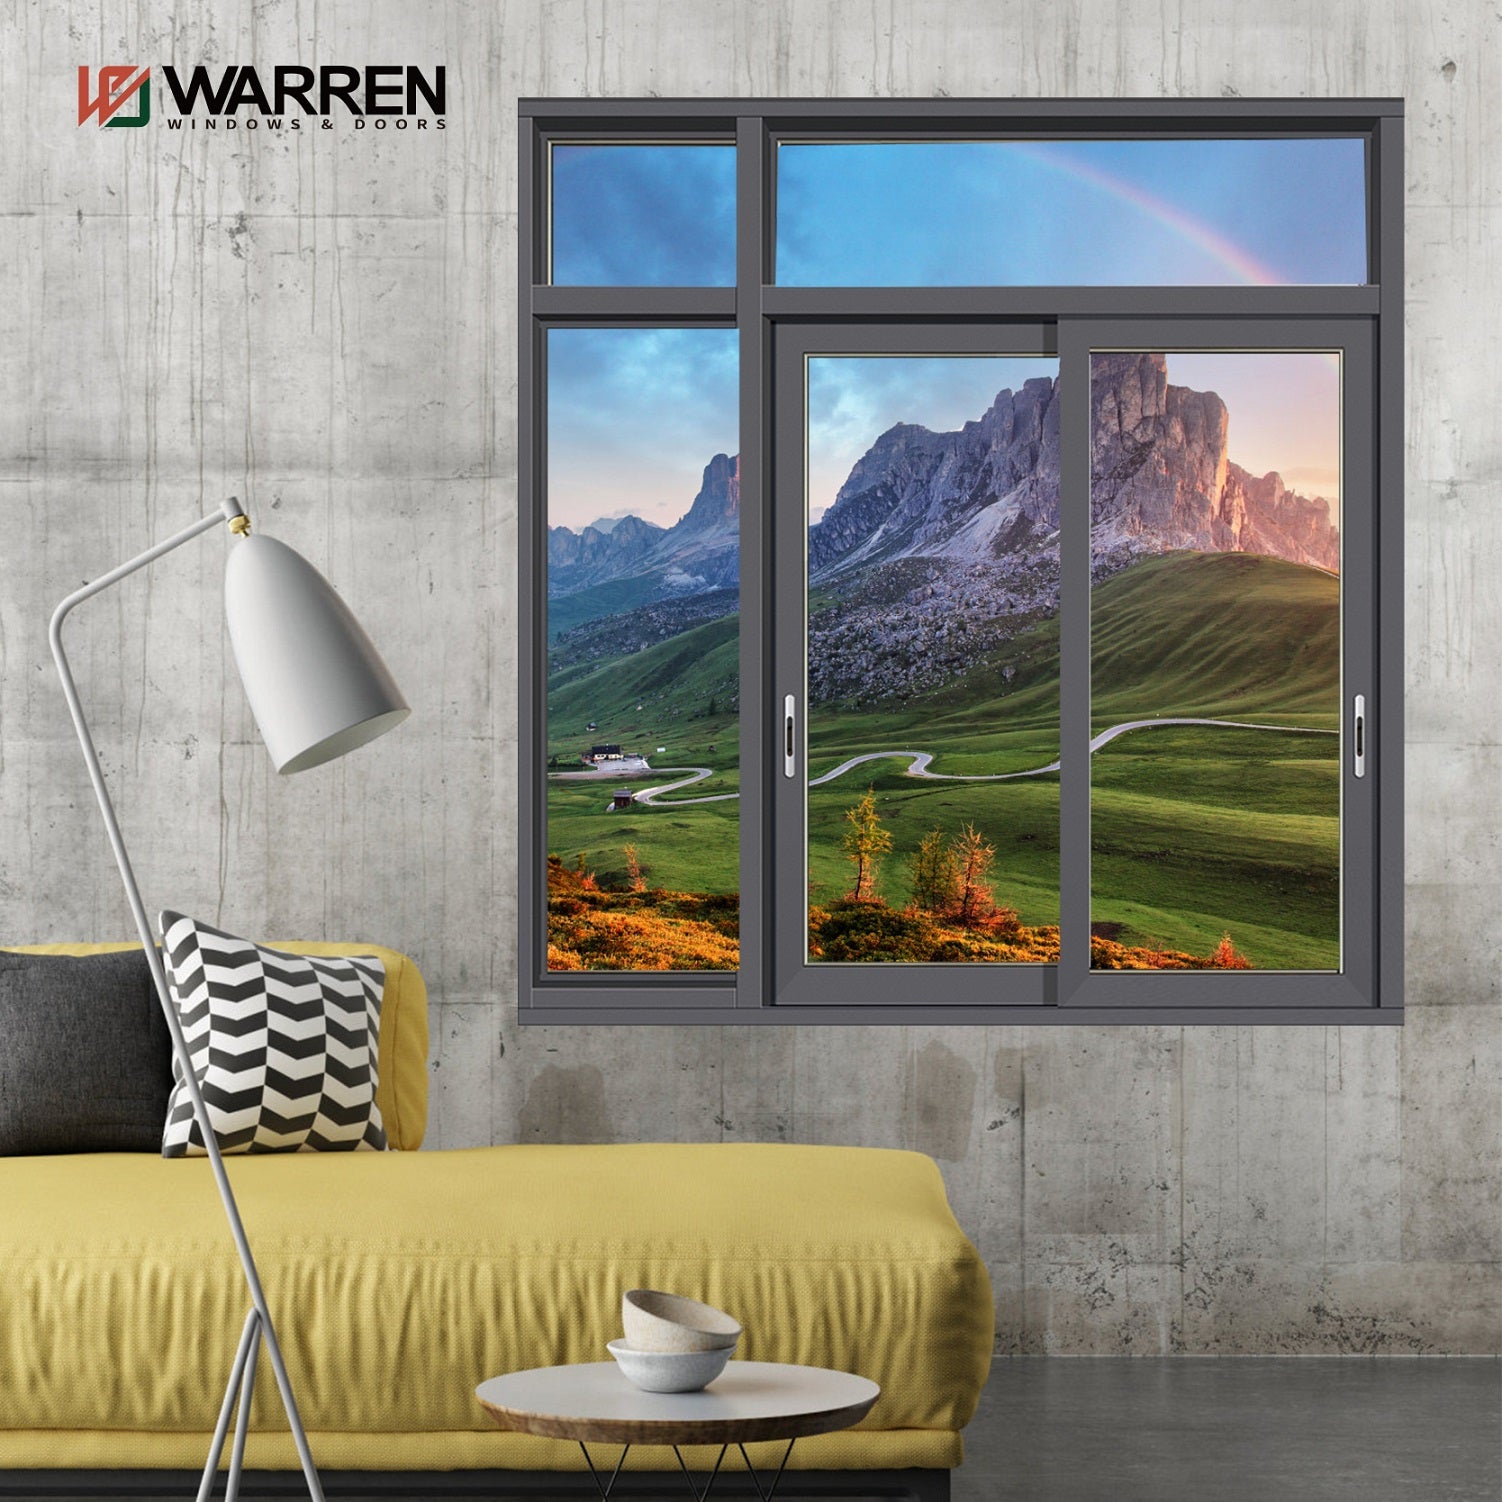 Warren 46x46 window energy saving heat insulation simple design aluminum sliding window residential